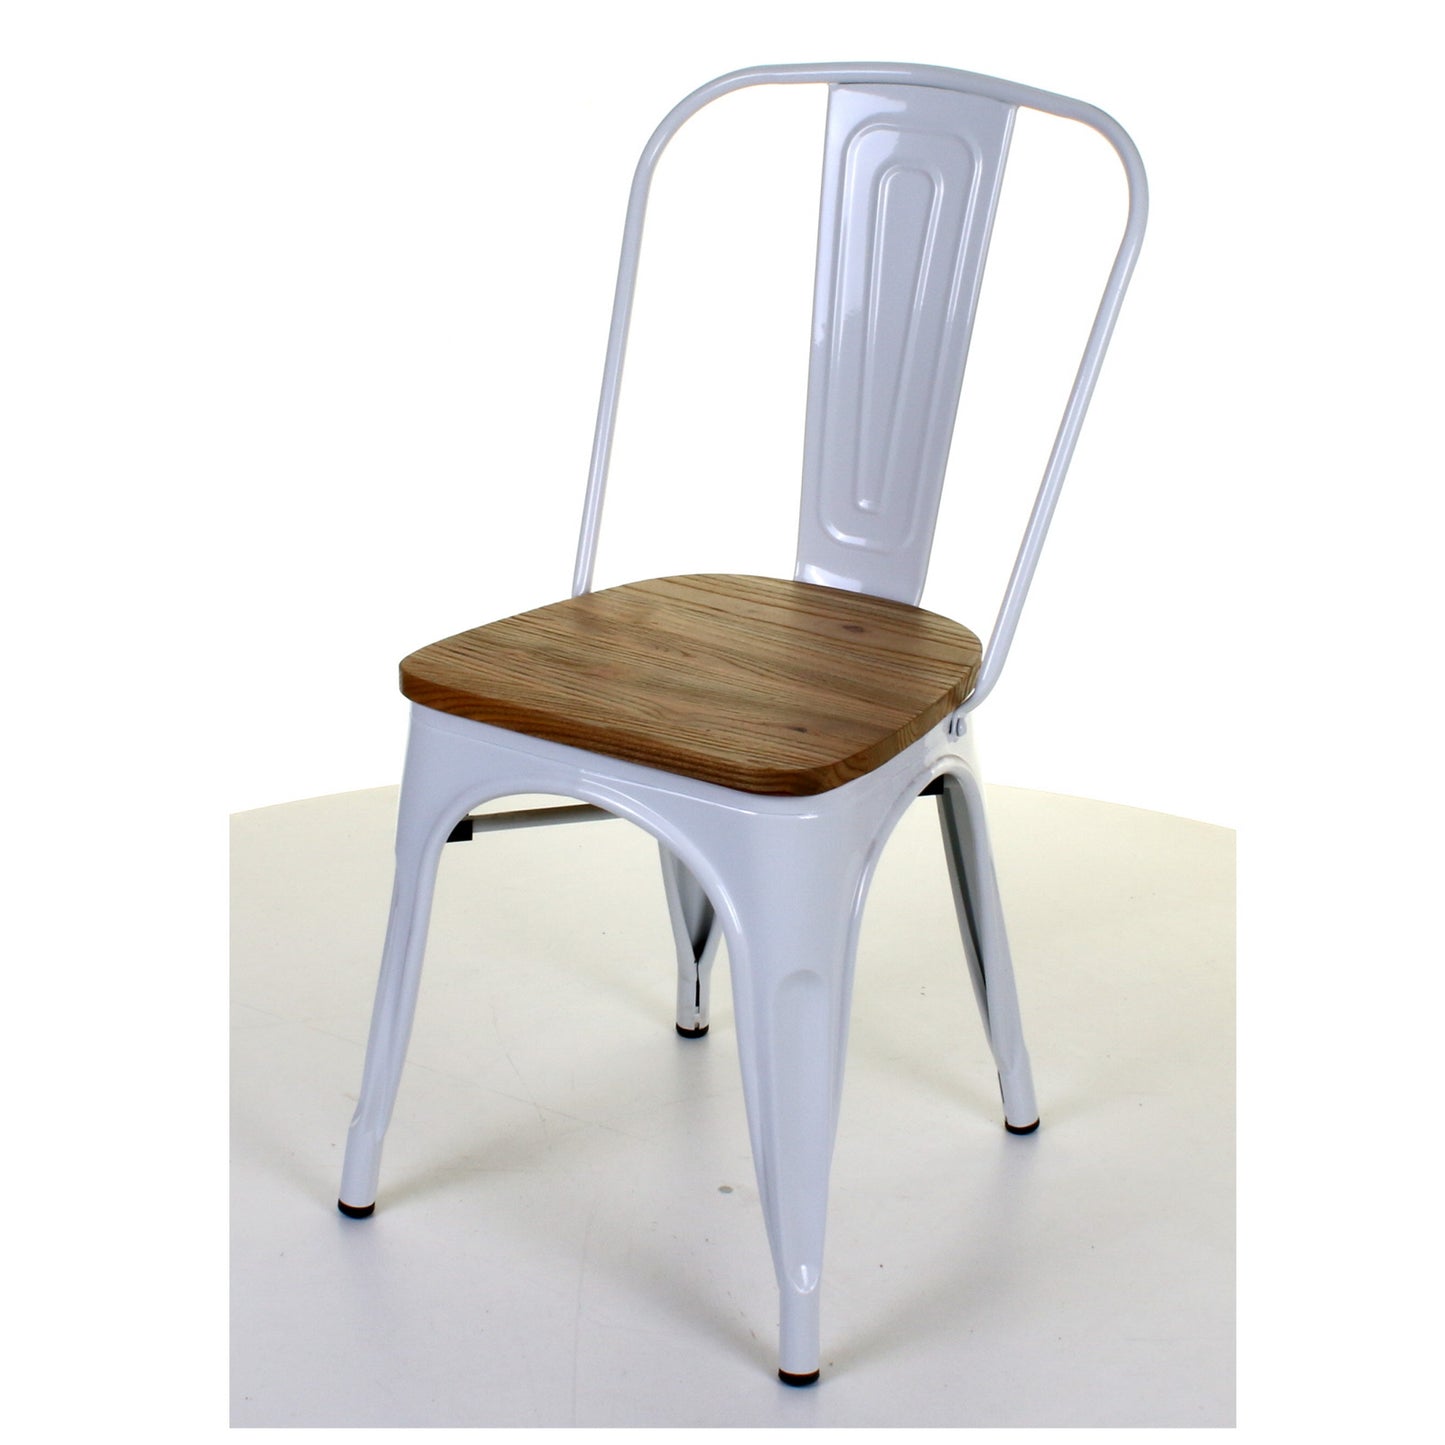 5PC Prato Table & 4 Palermo Chairs Set - White